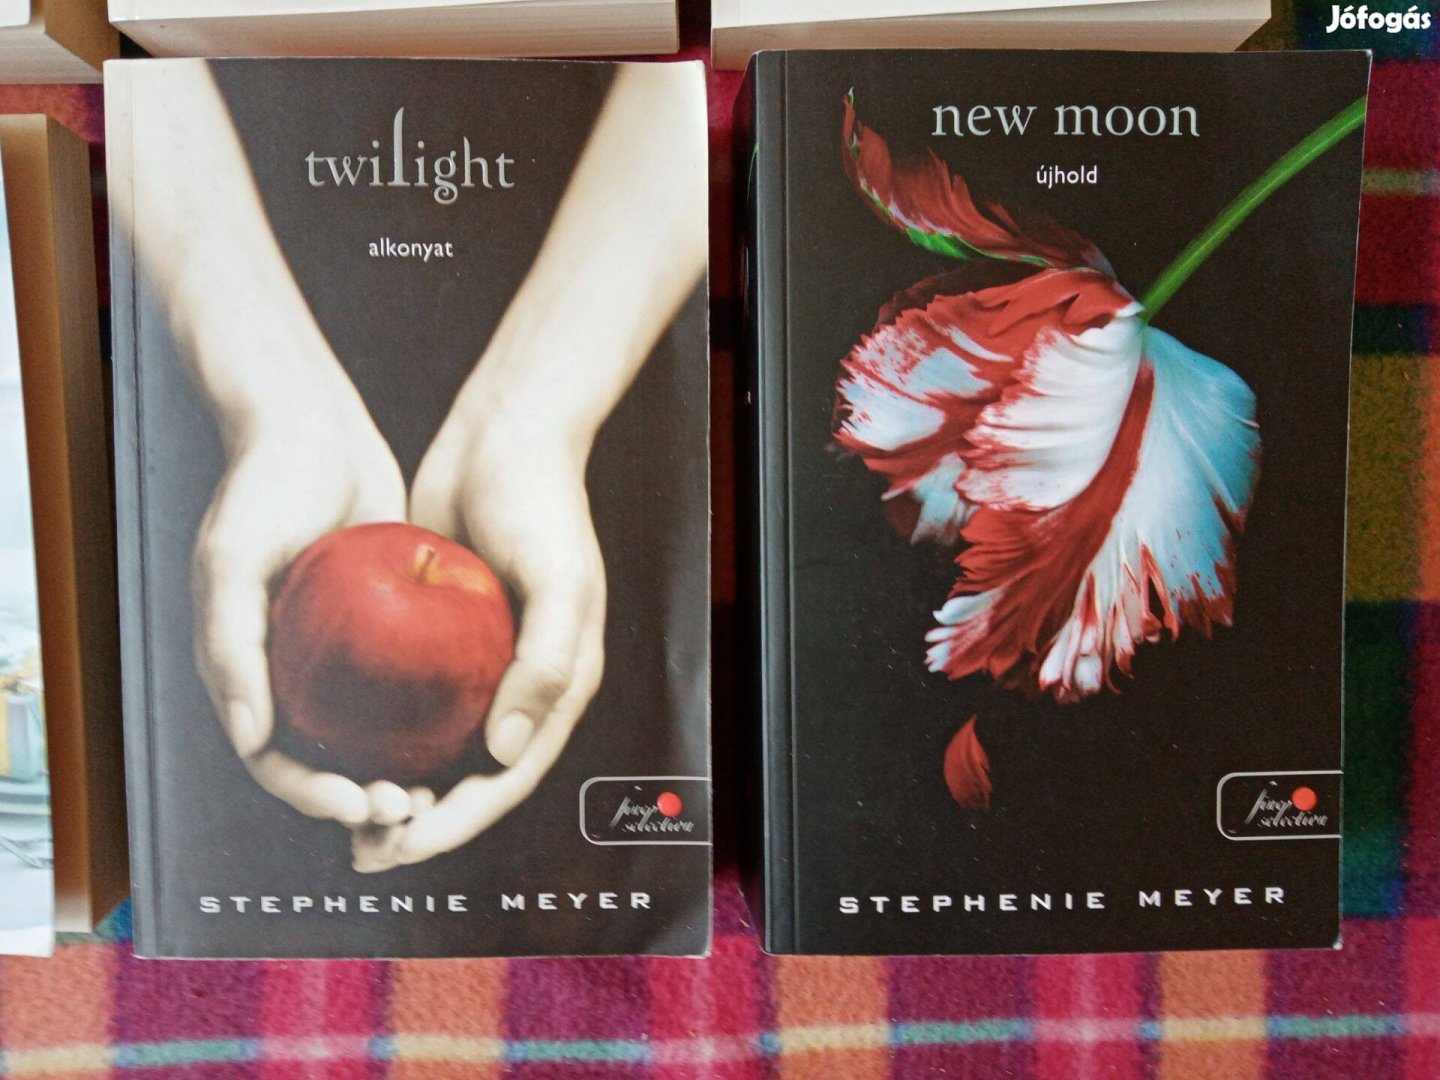 Stephenie Meyer Twilight Alkonyat New Moon Újhold 1, 2